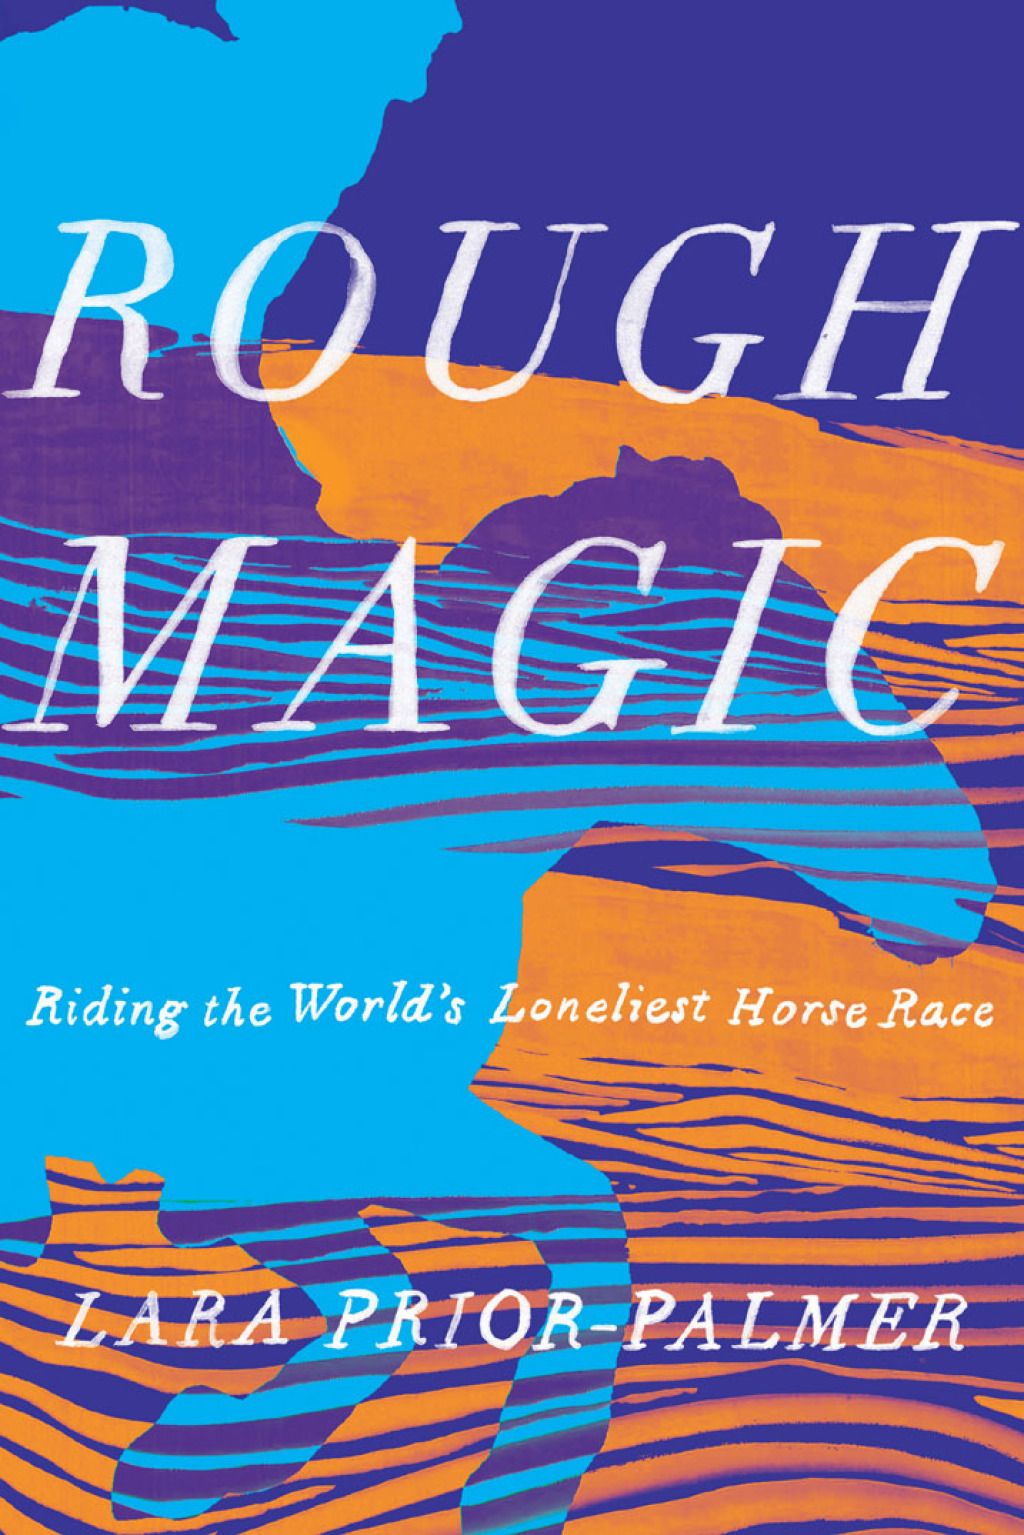 Image for "Rough Magic"